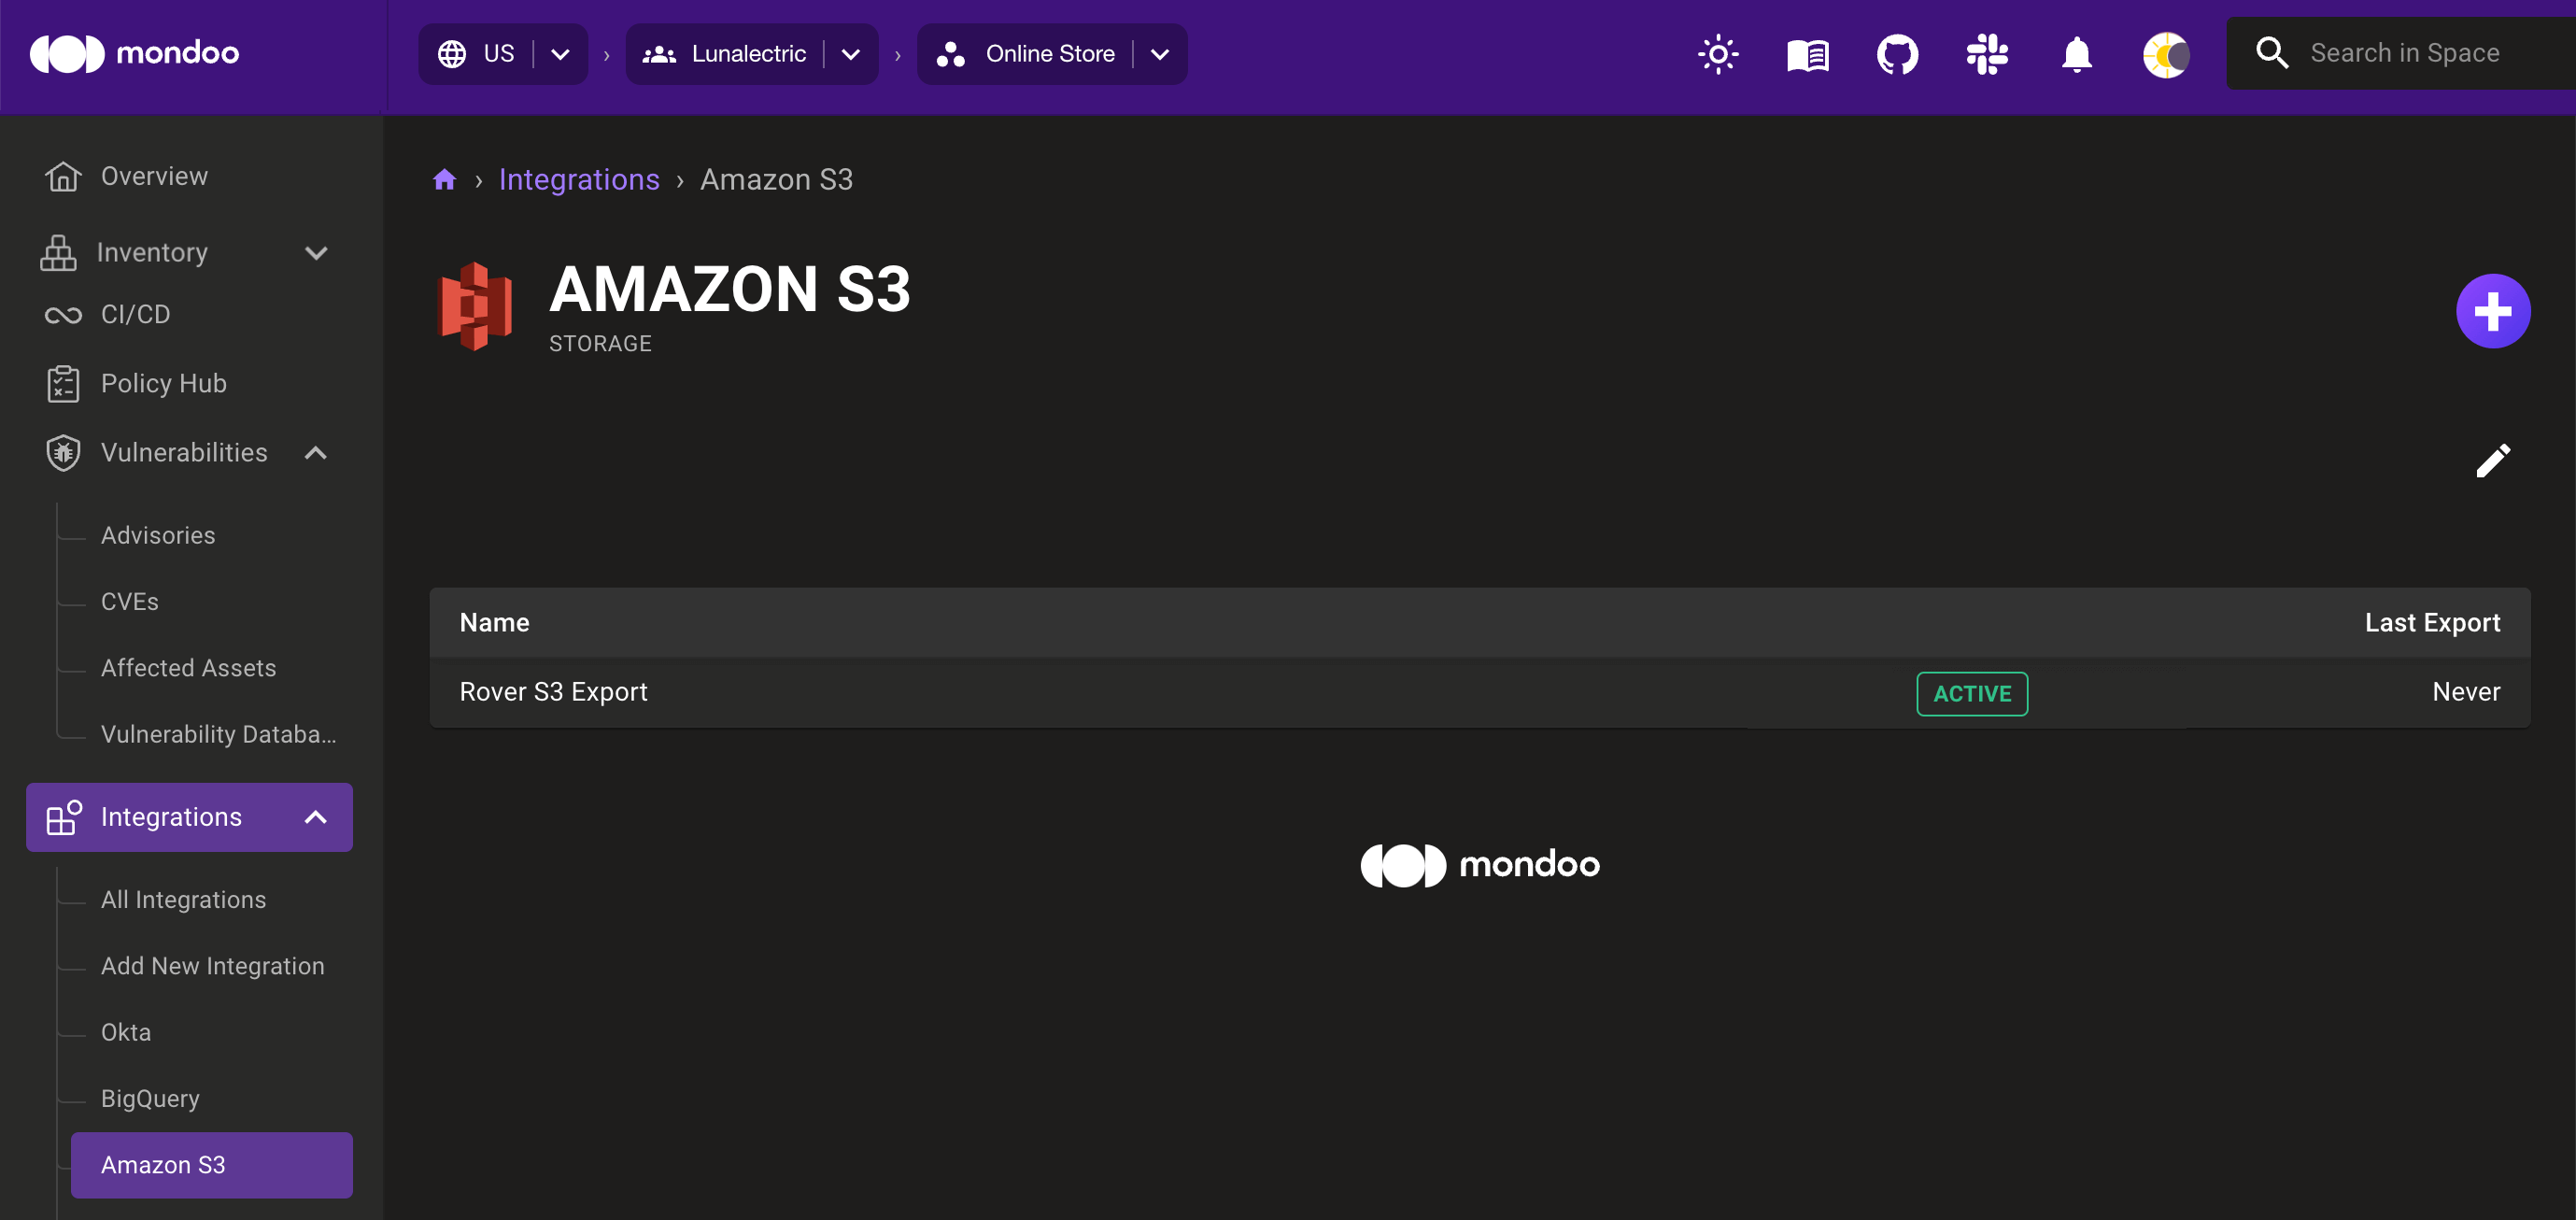 Amazon S3 integrations list